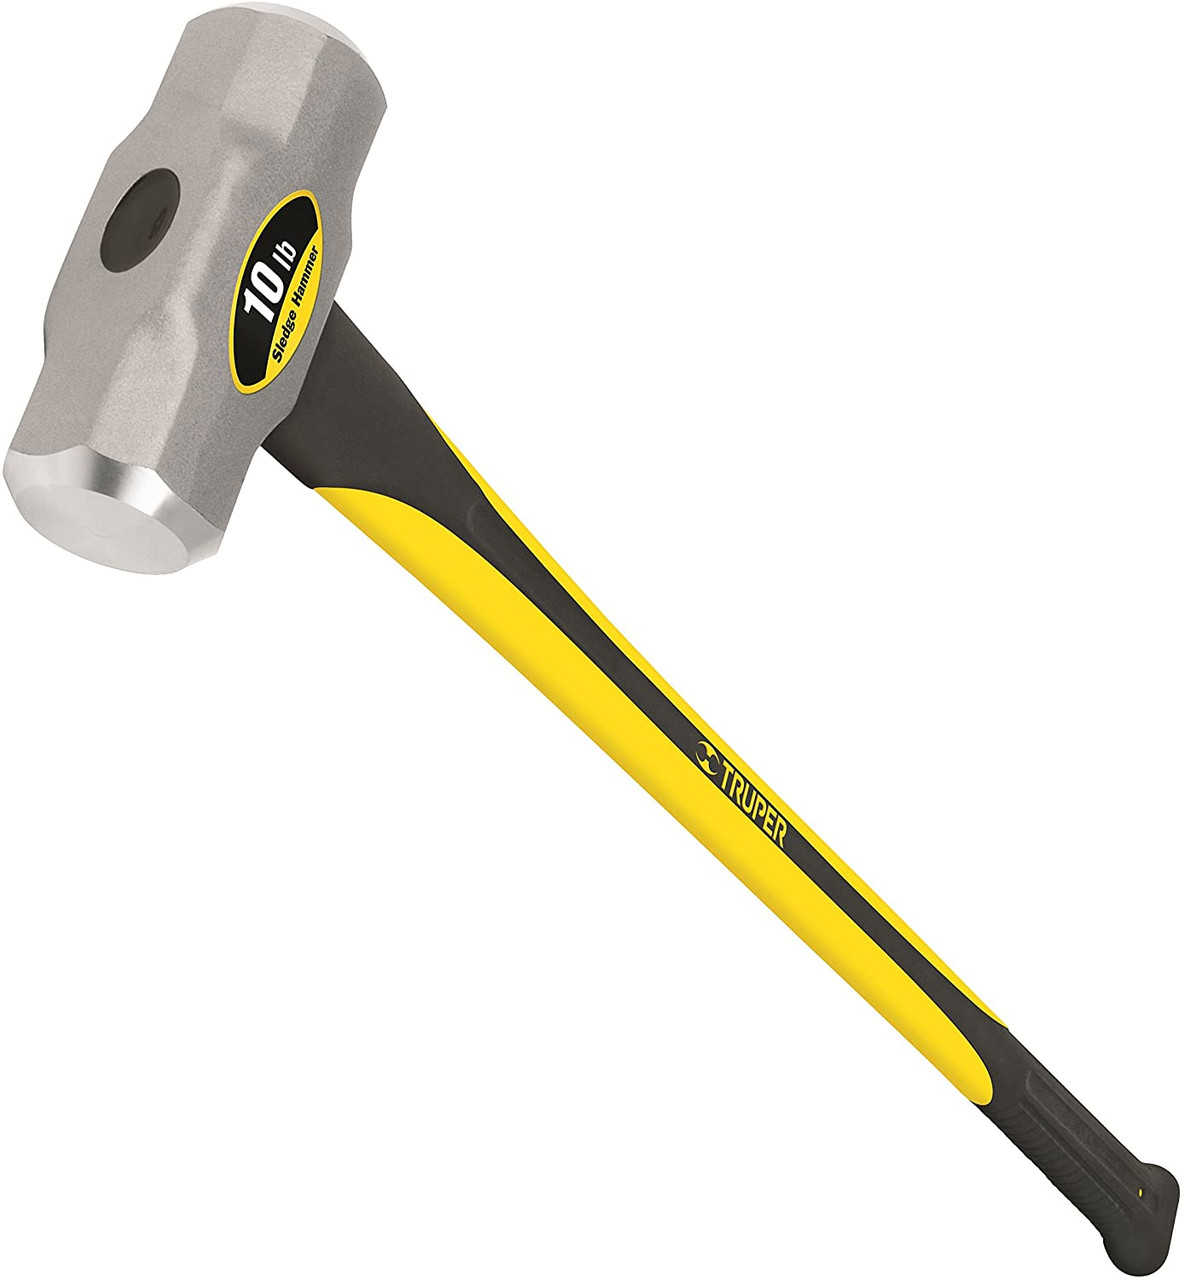 Truper  Sledge Hammer Fiberglass Handle with Rubber Grip 36-Inch